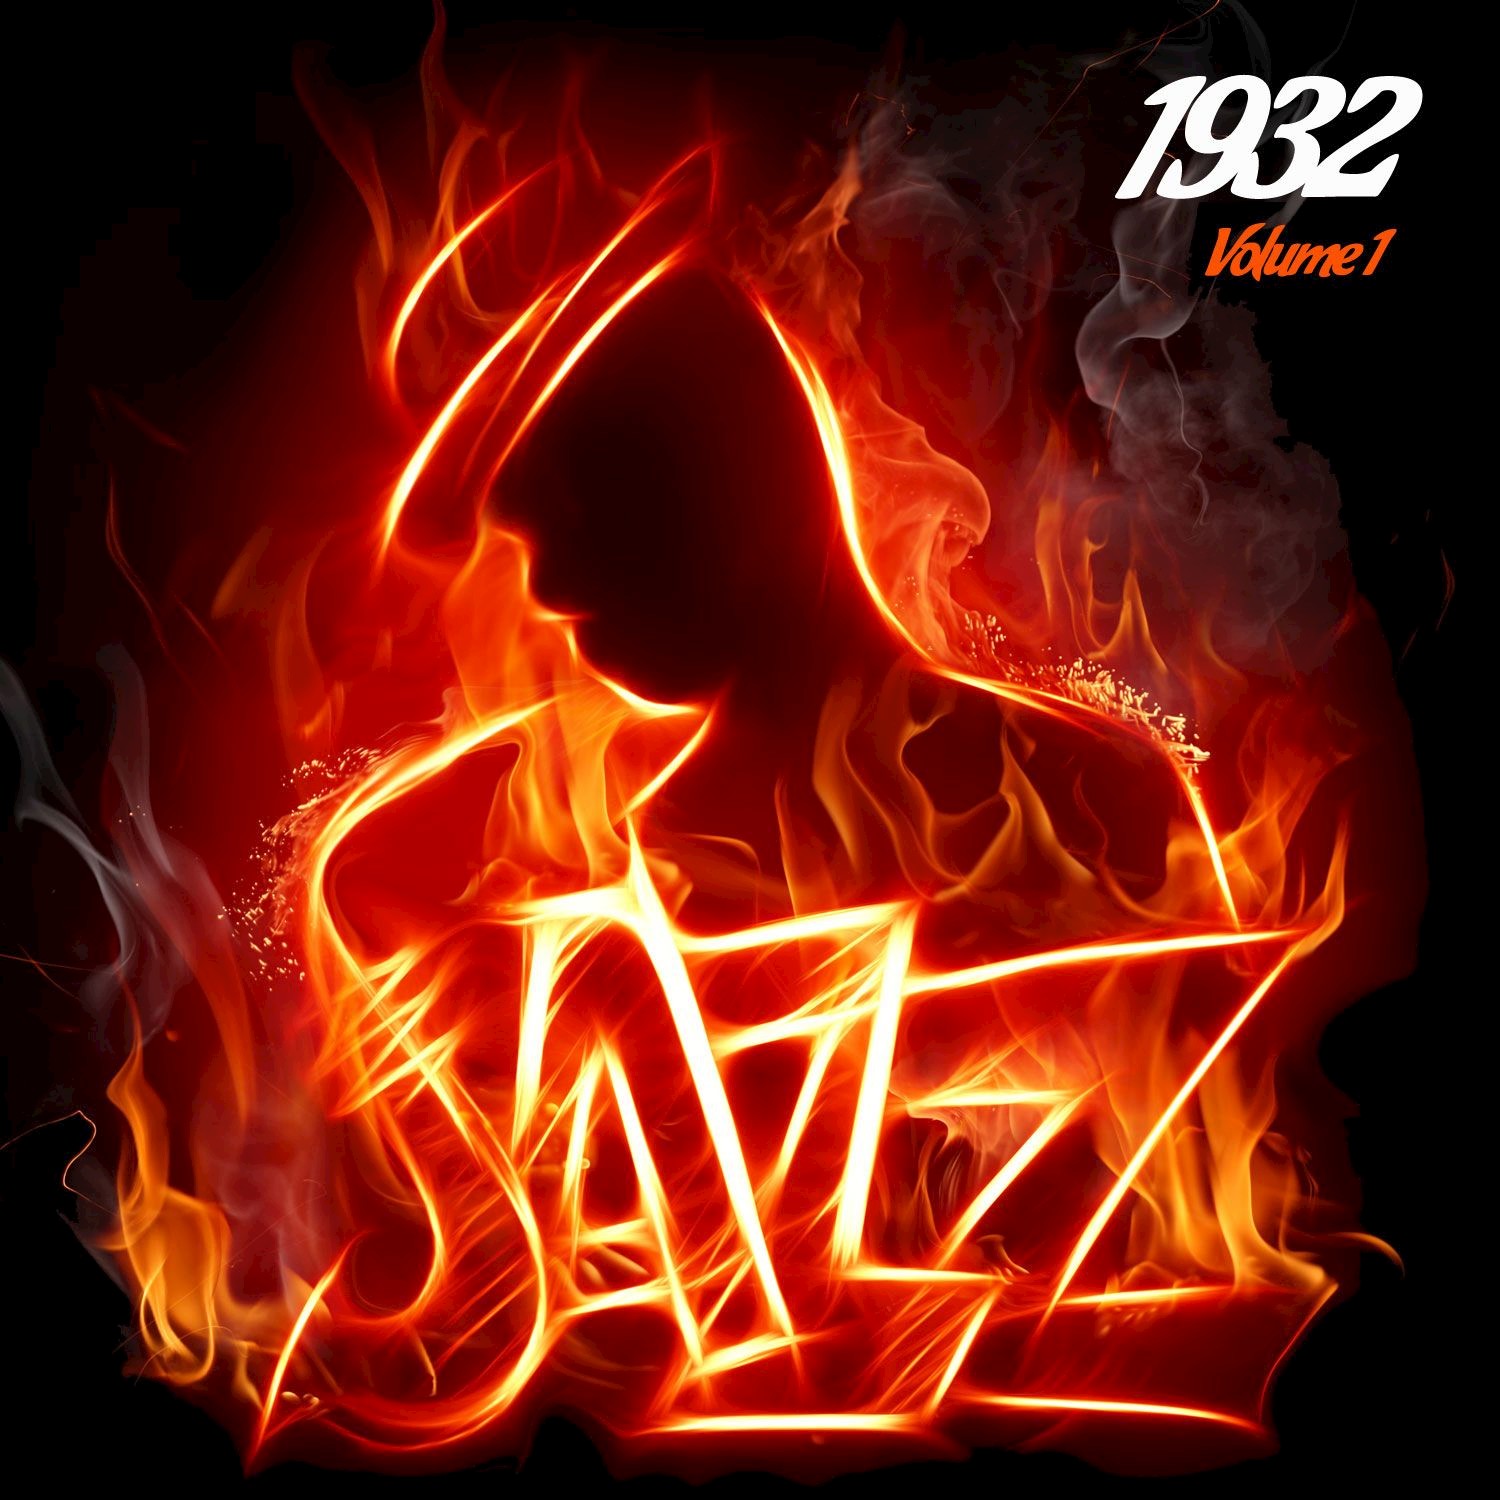 Jazz 1932